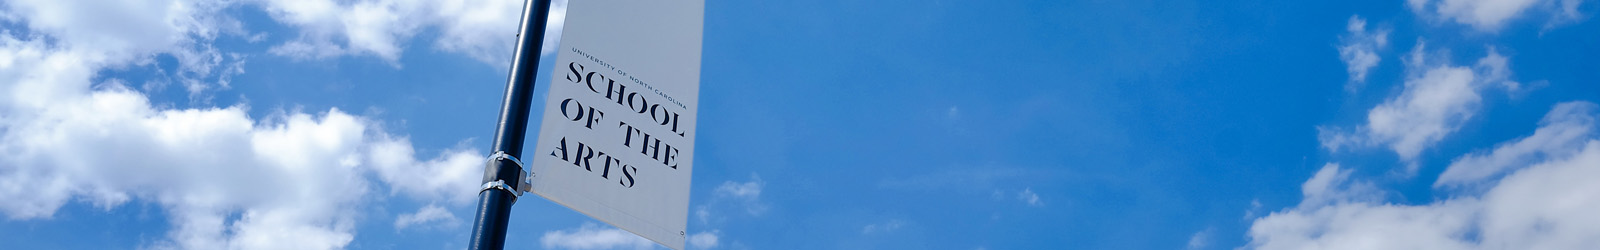 UNCSA banner against a blue sky